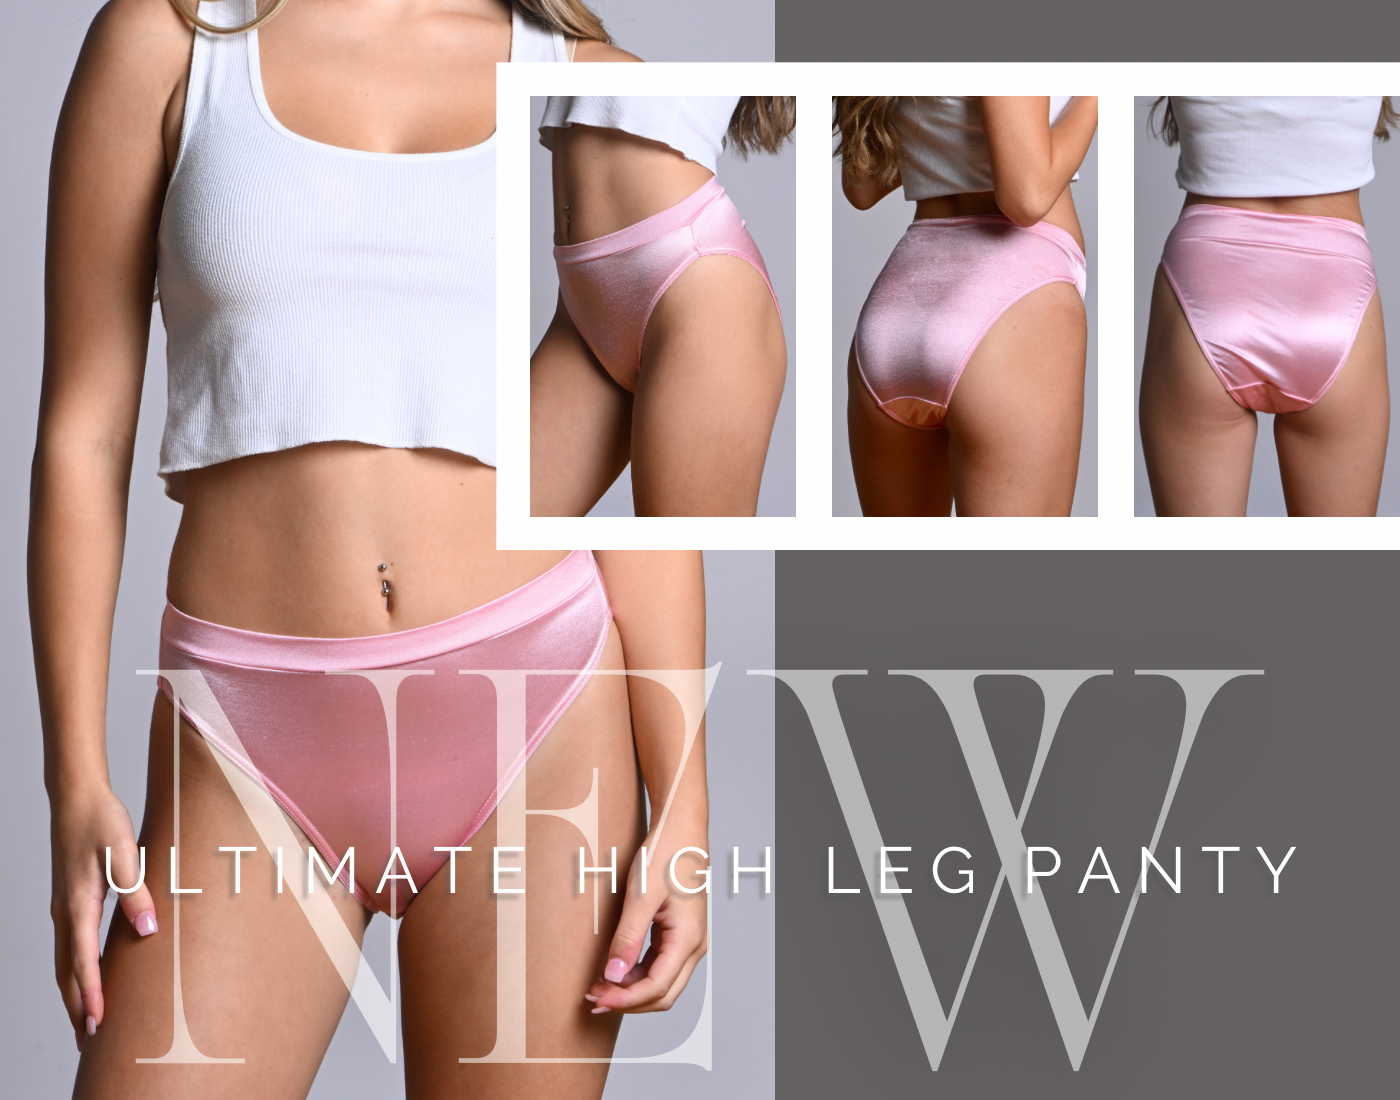 White Satin String Bikini panties, classic style for women and men!